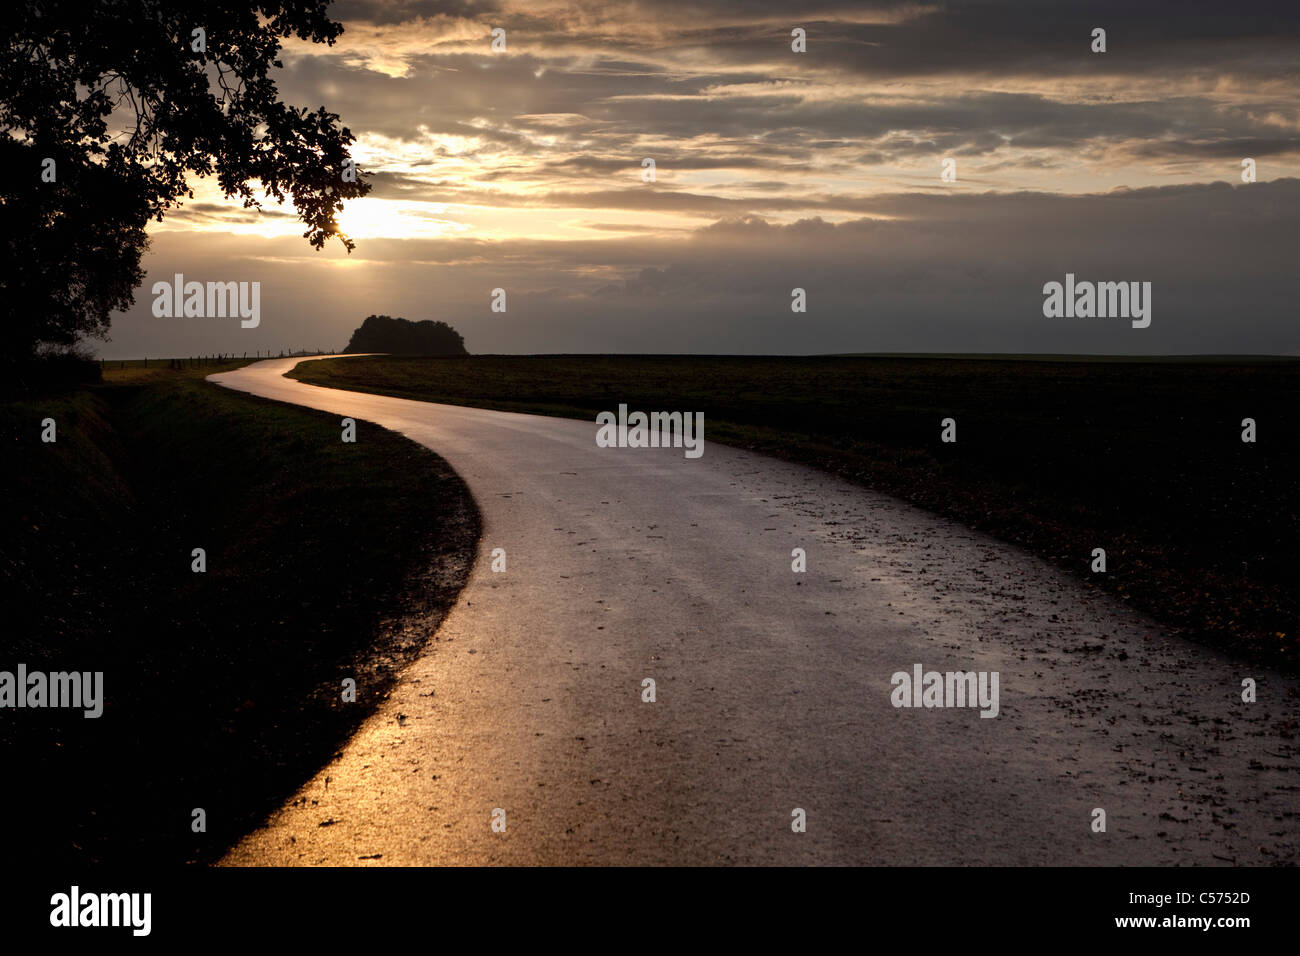 The Netherlands, Ootmarsum. Road at sunset. Stock Photo